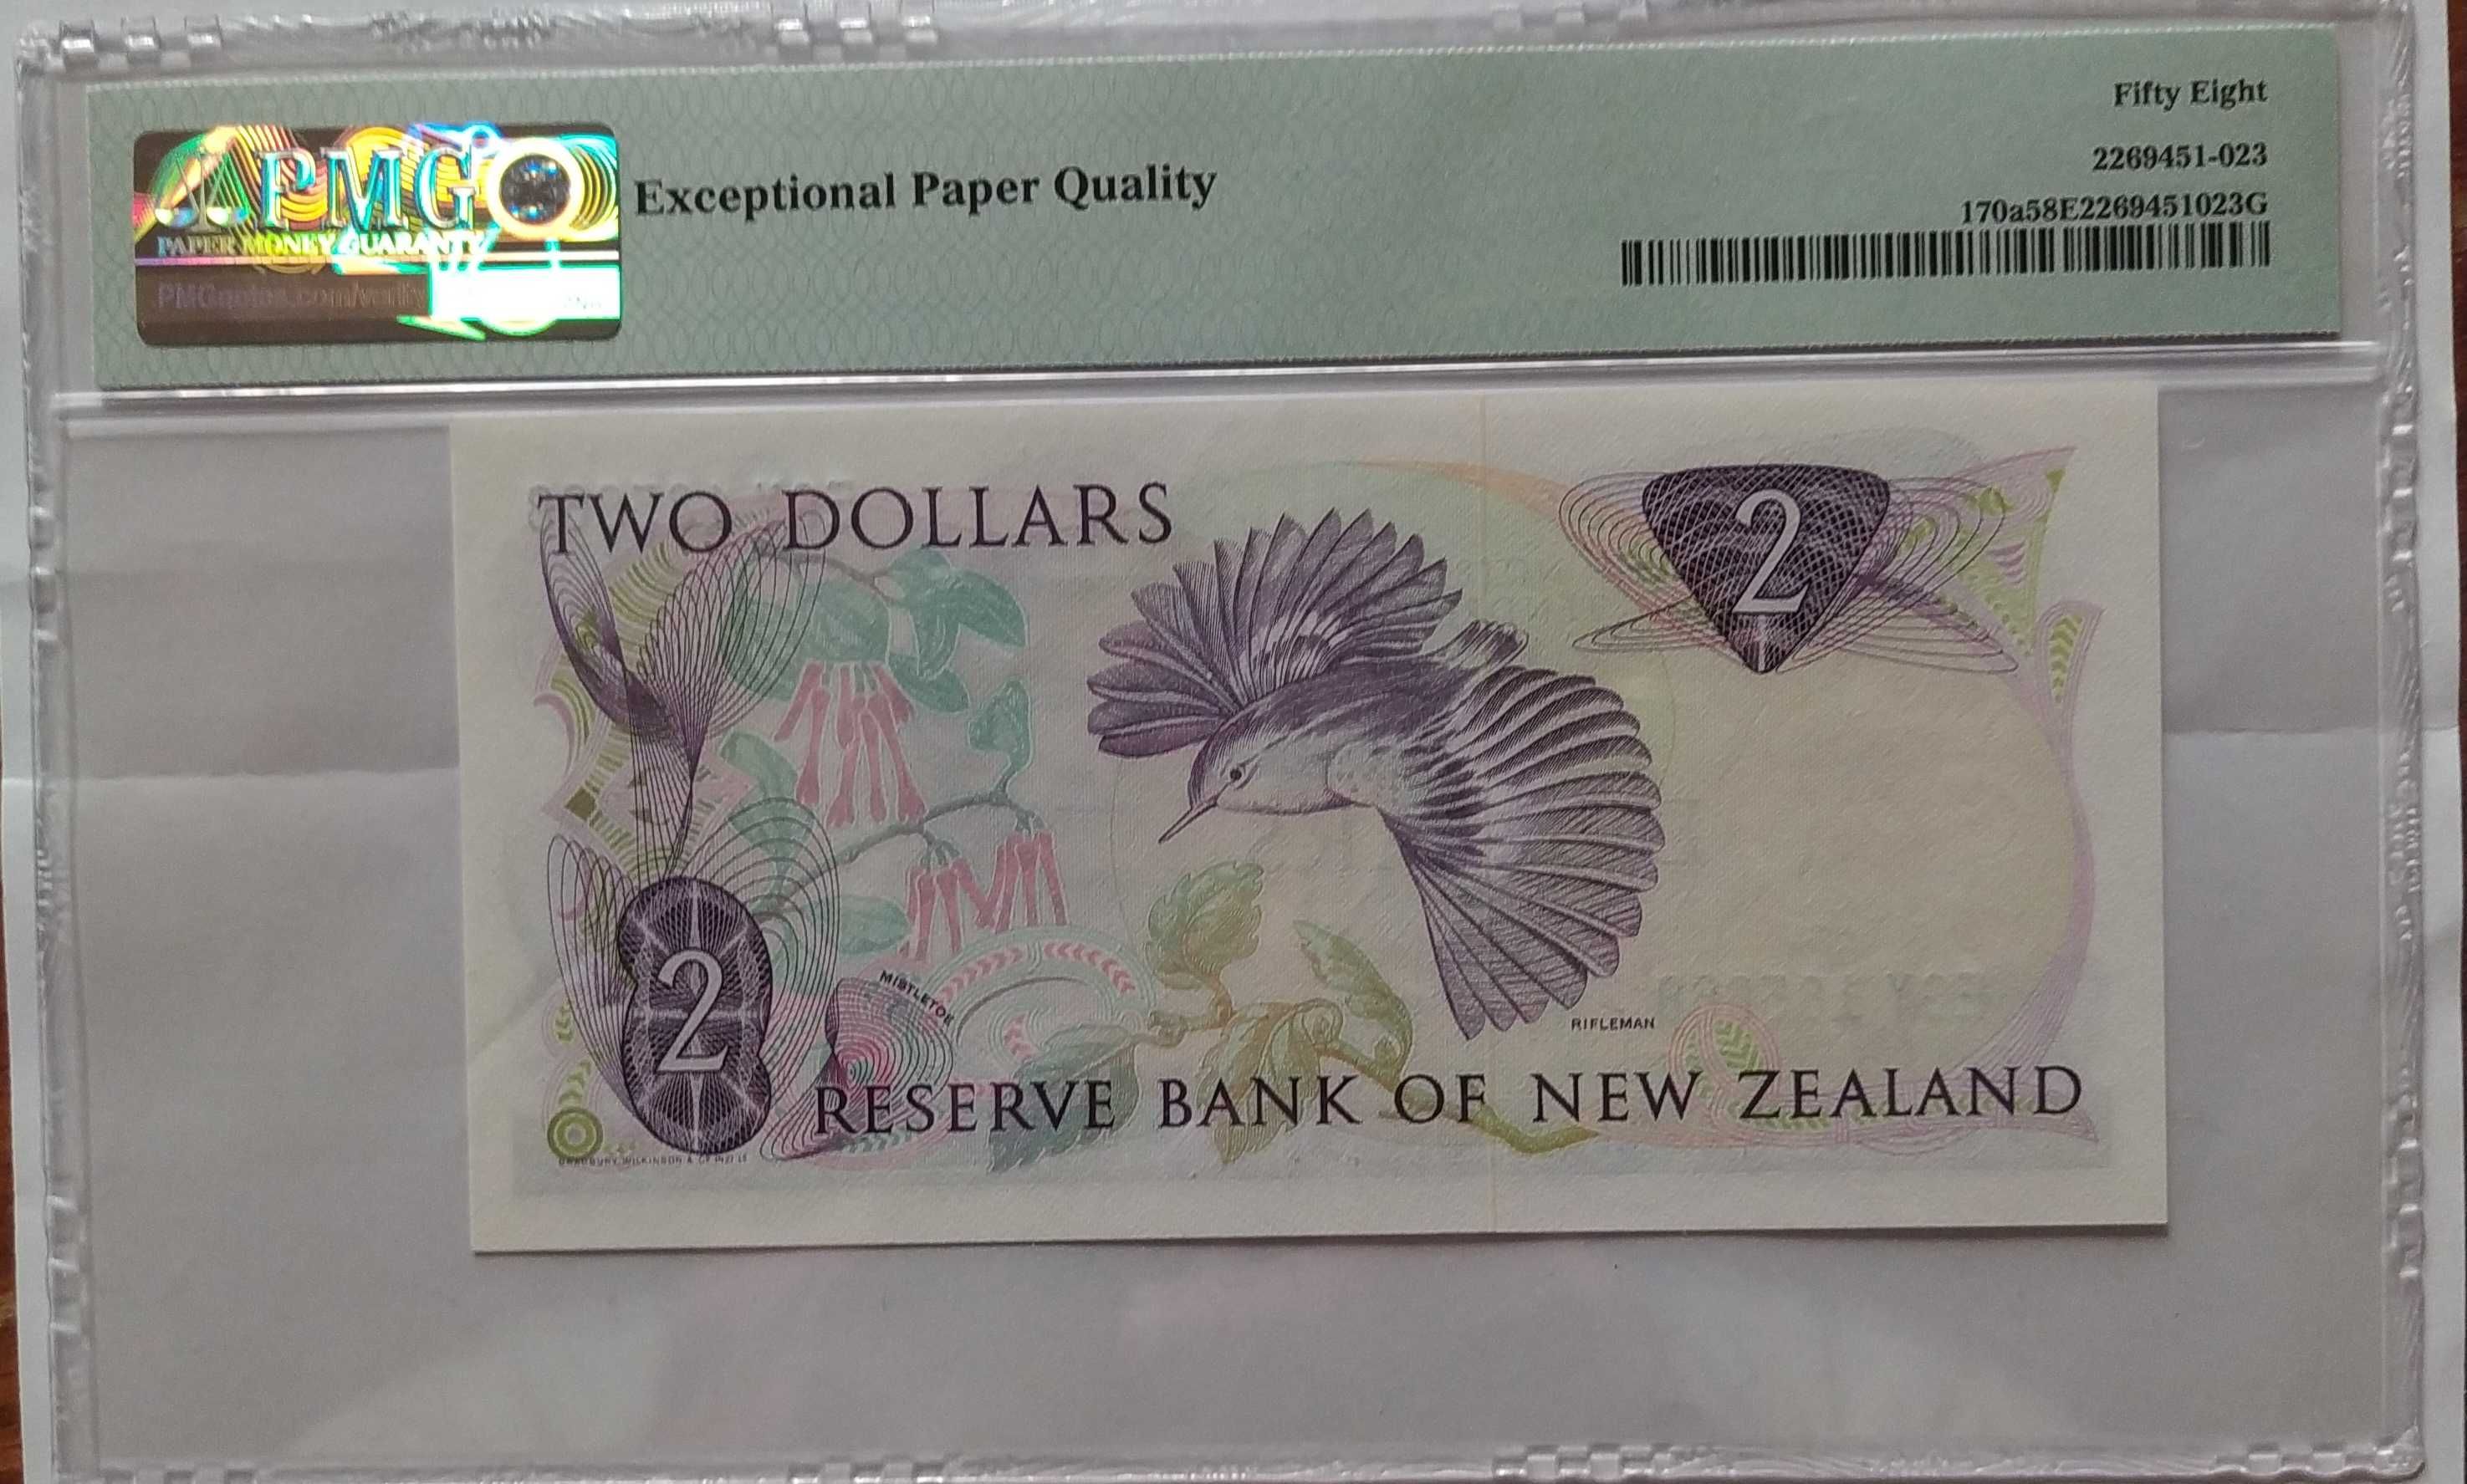 PMG 58 - Нова Зеландия, 2 долара (1981-1985)